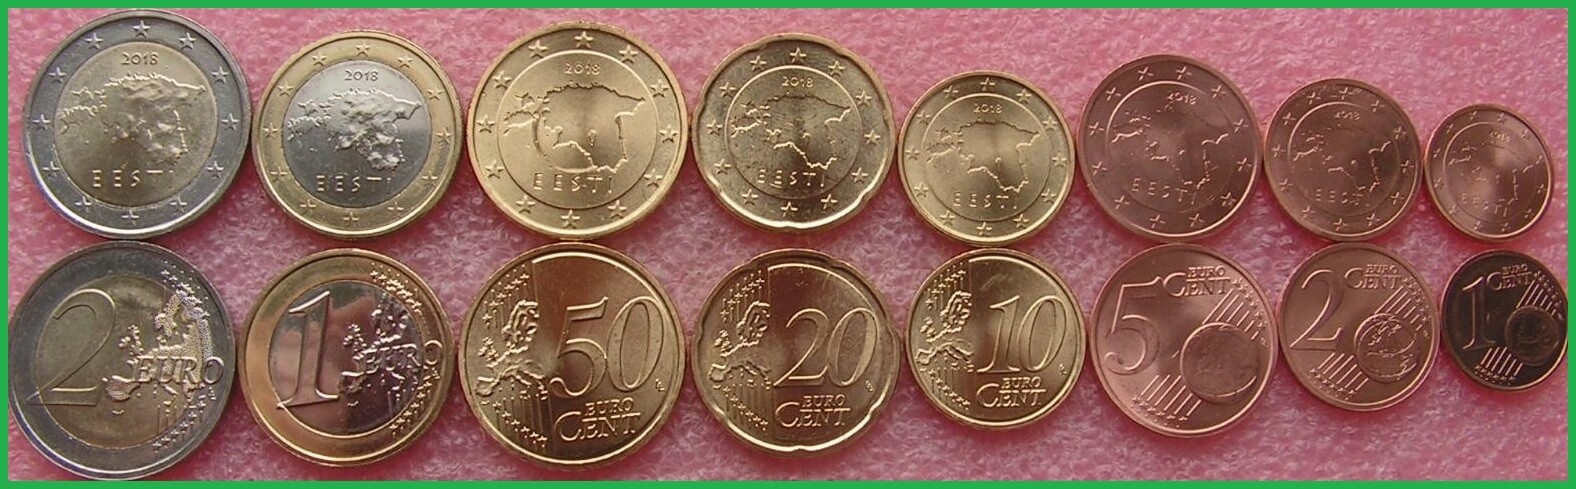 Эстония 2018 г. Набор из 8 монет